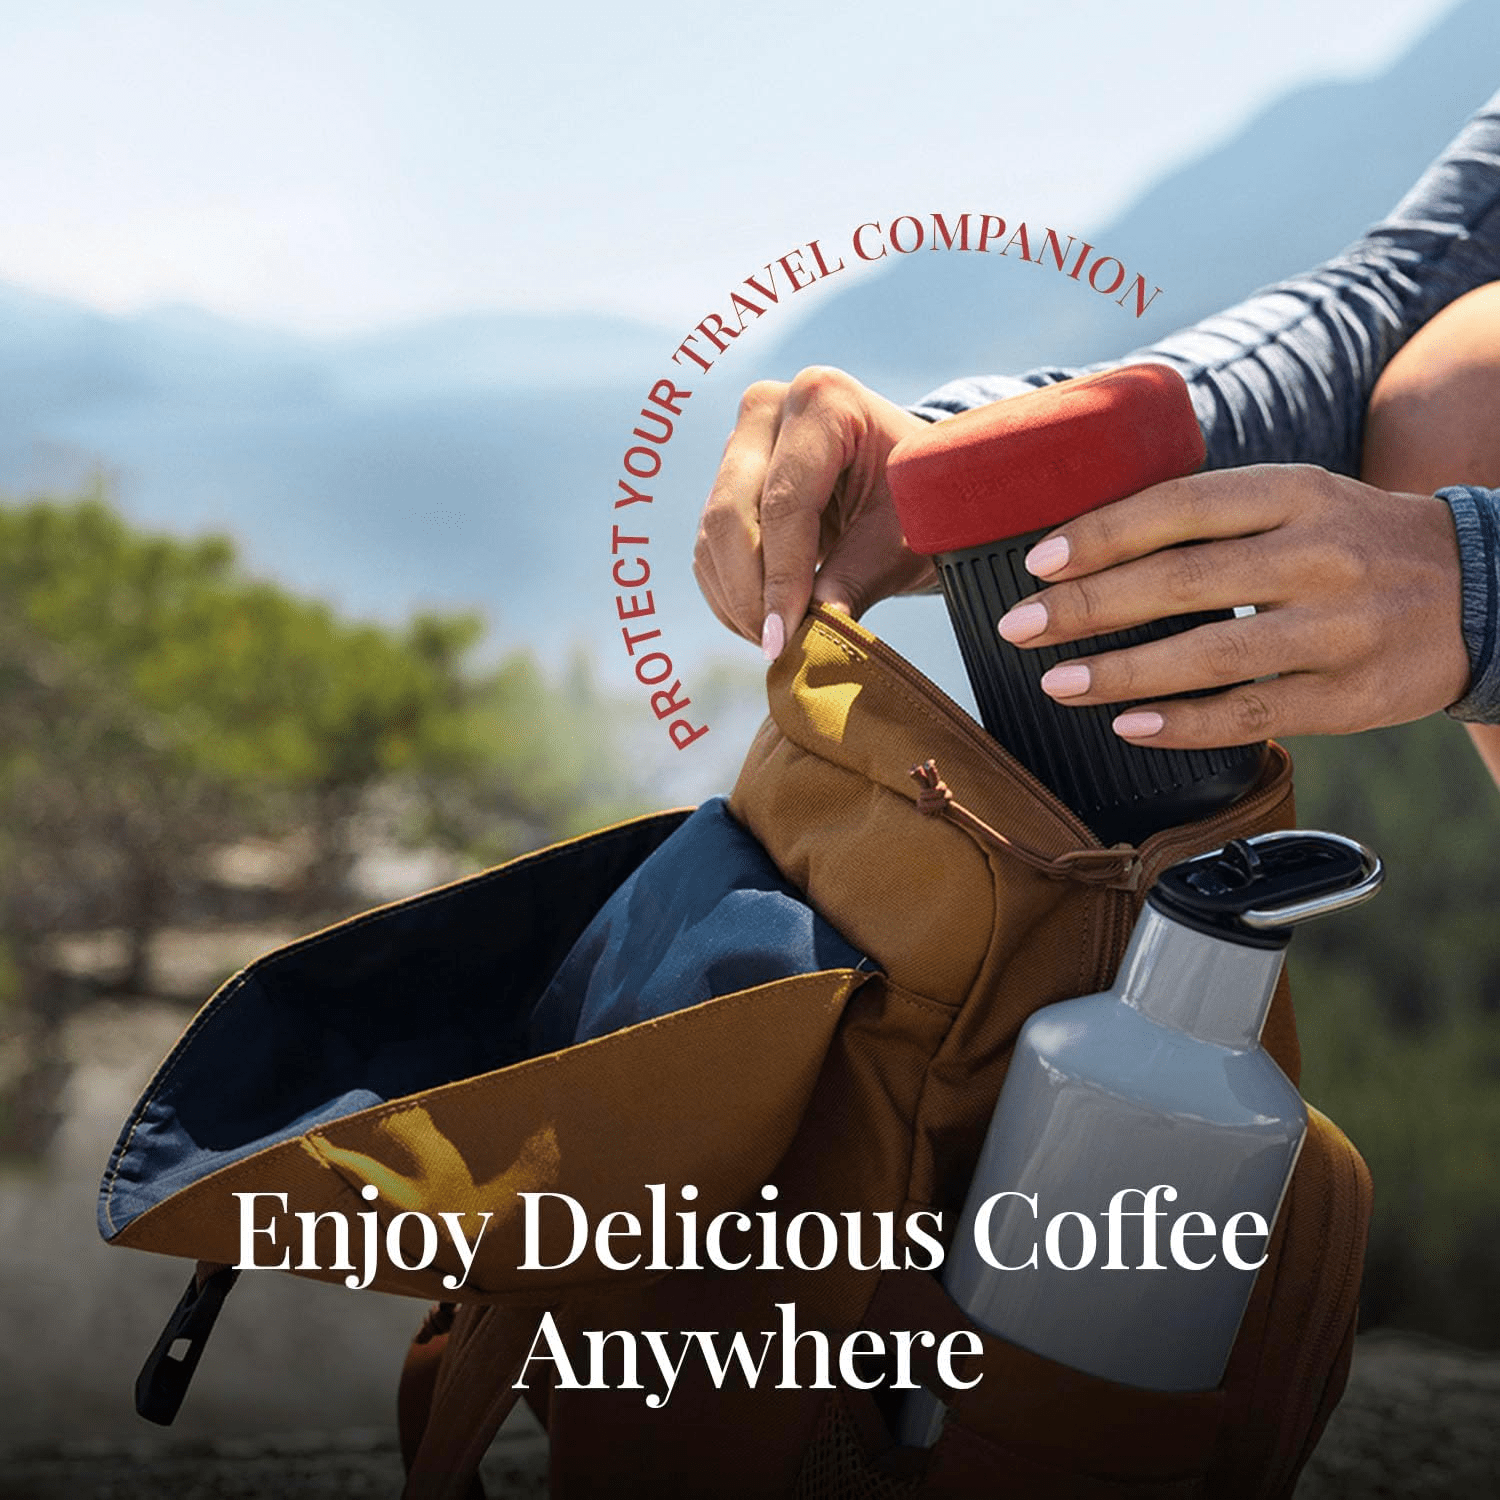 AeroPress Go Portable Travel Coffee Press, 1-3 Cups - Barbarossa Coffee